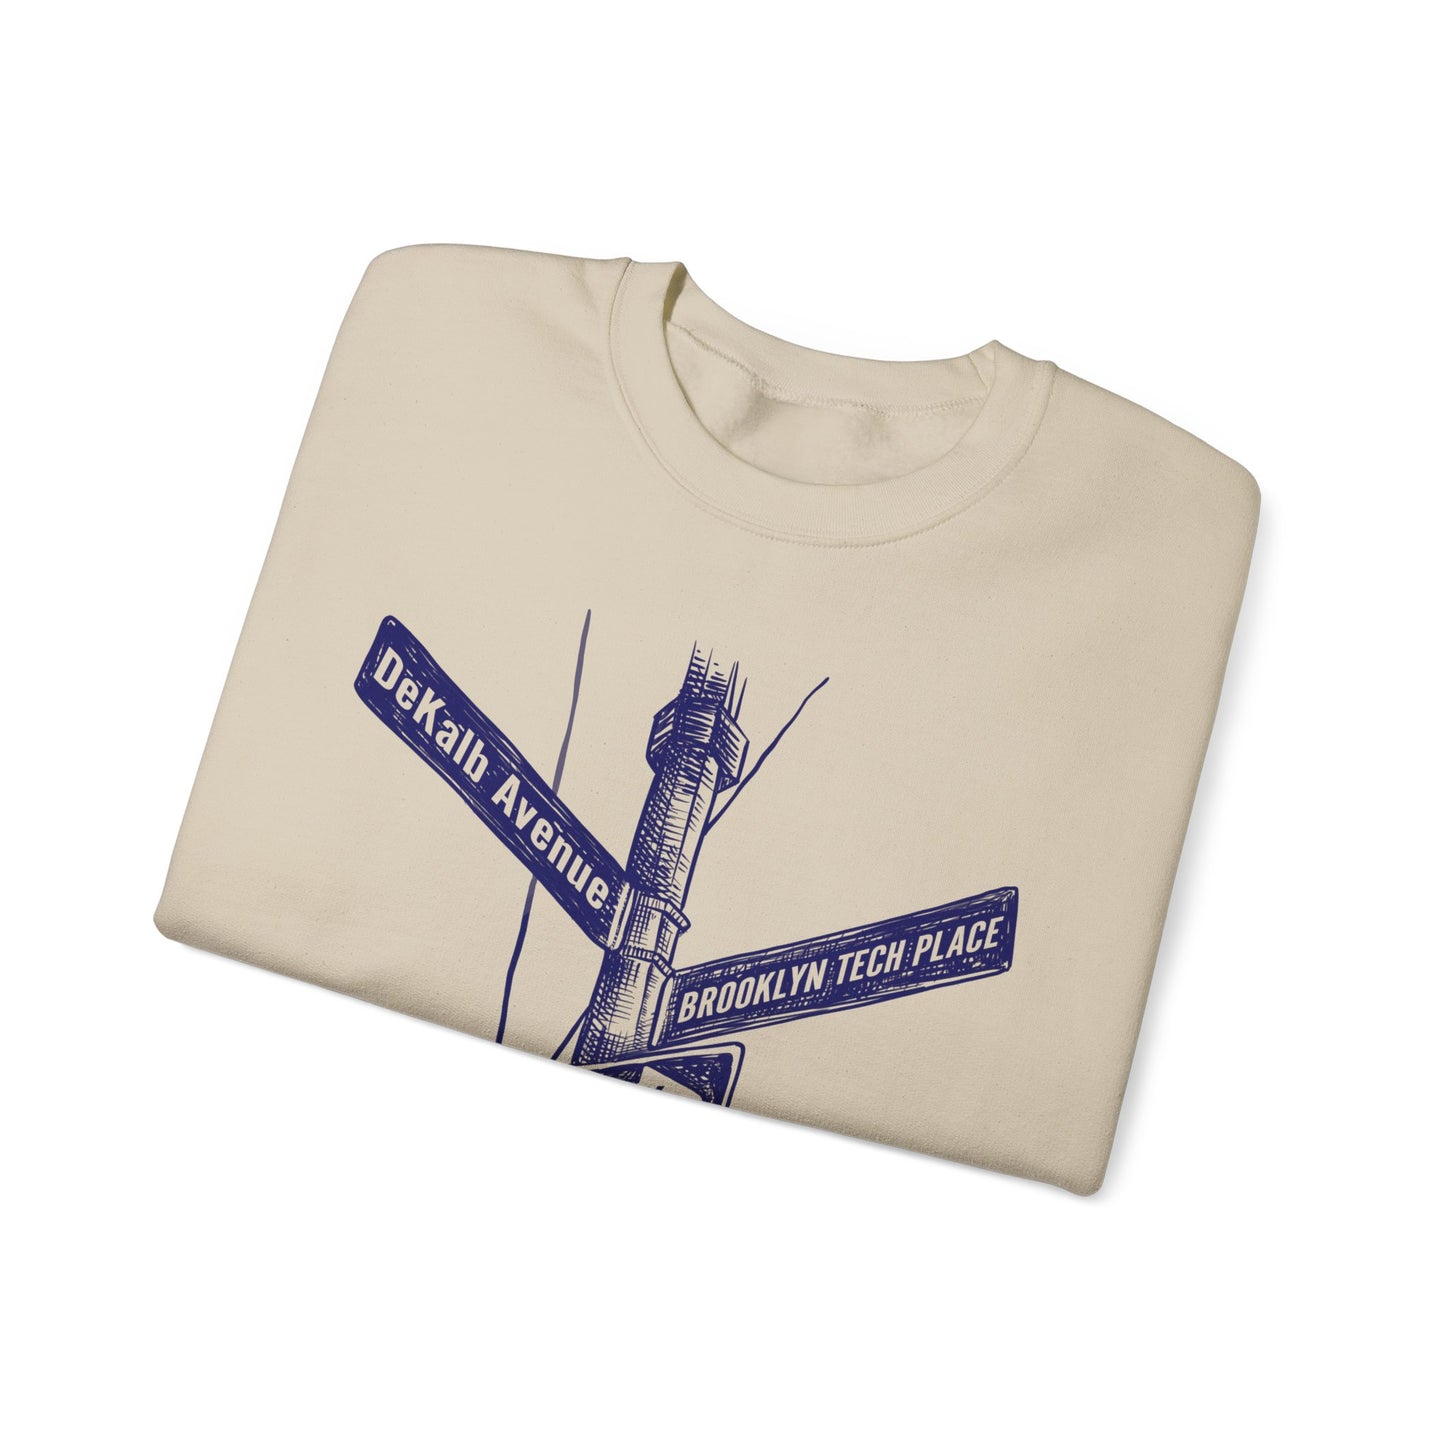 Boutique - Dekalb Ave & Brooklyn Tech Pl - Men's Heavy Blend Crewneck Sweatshirt - Navy Graphic